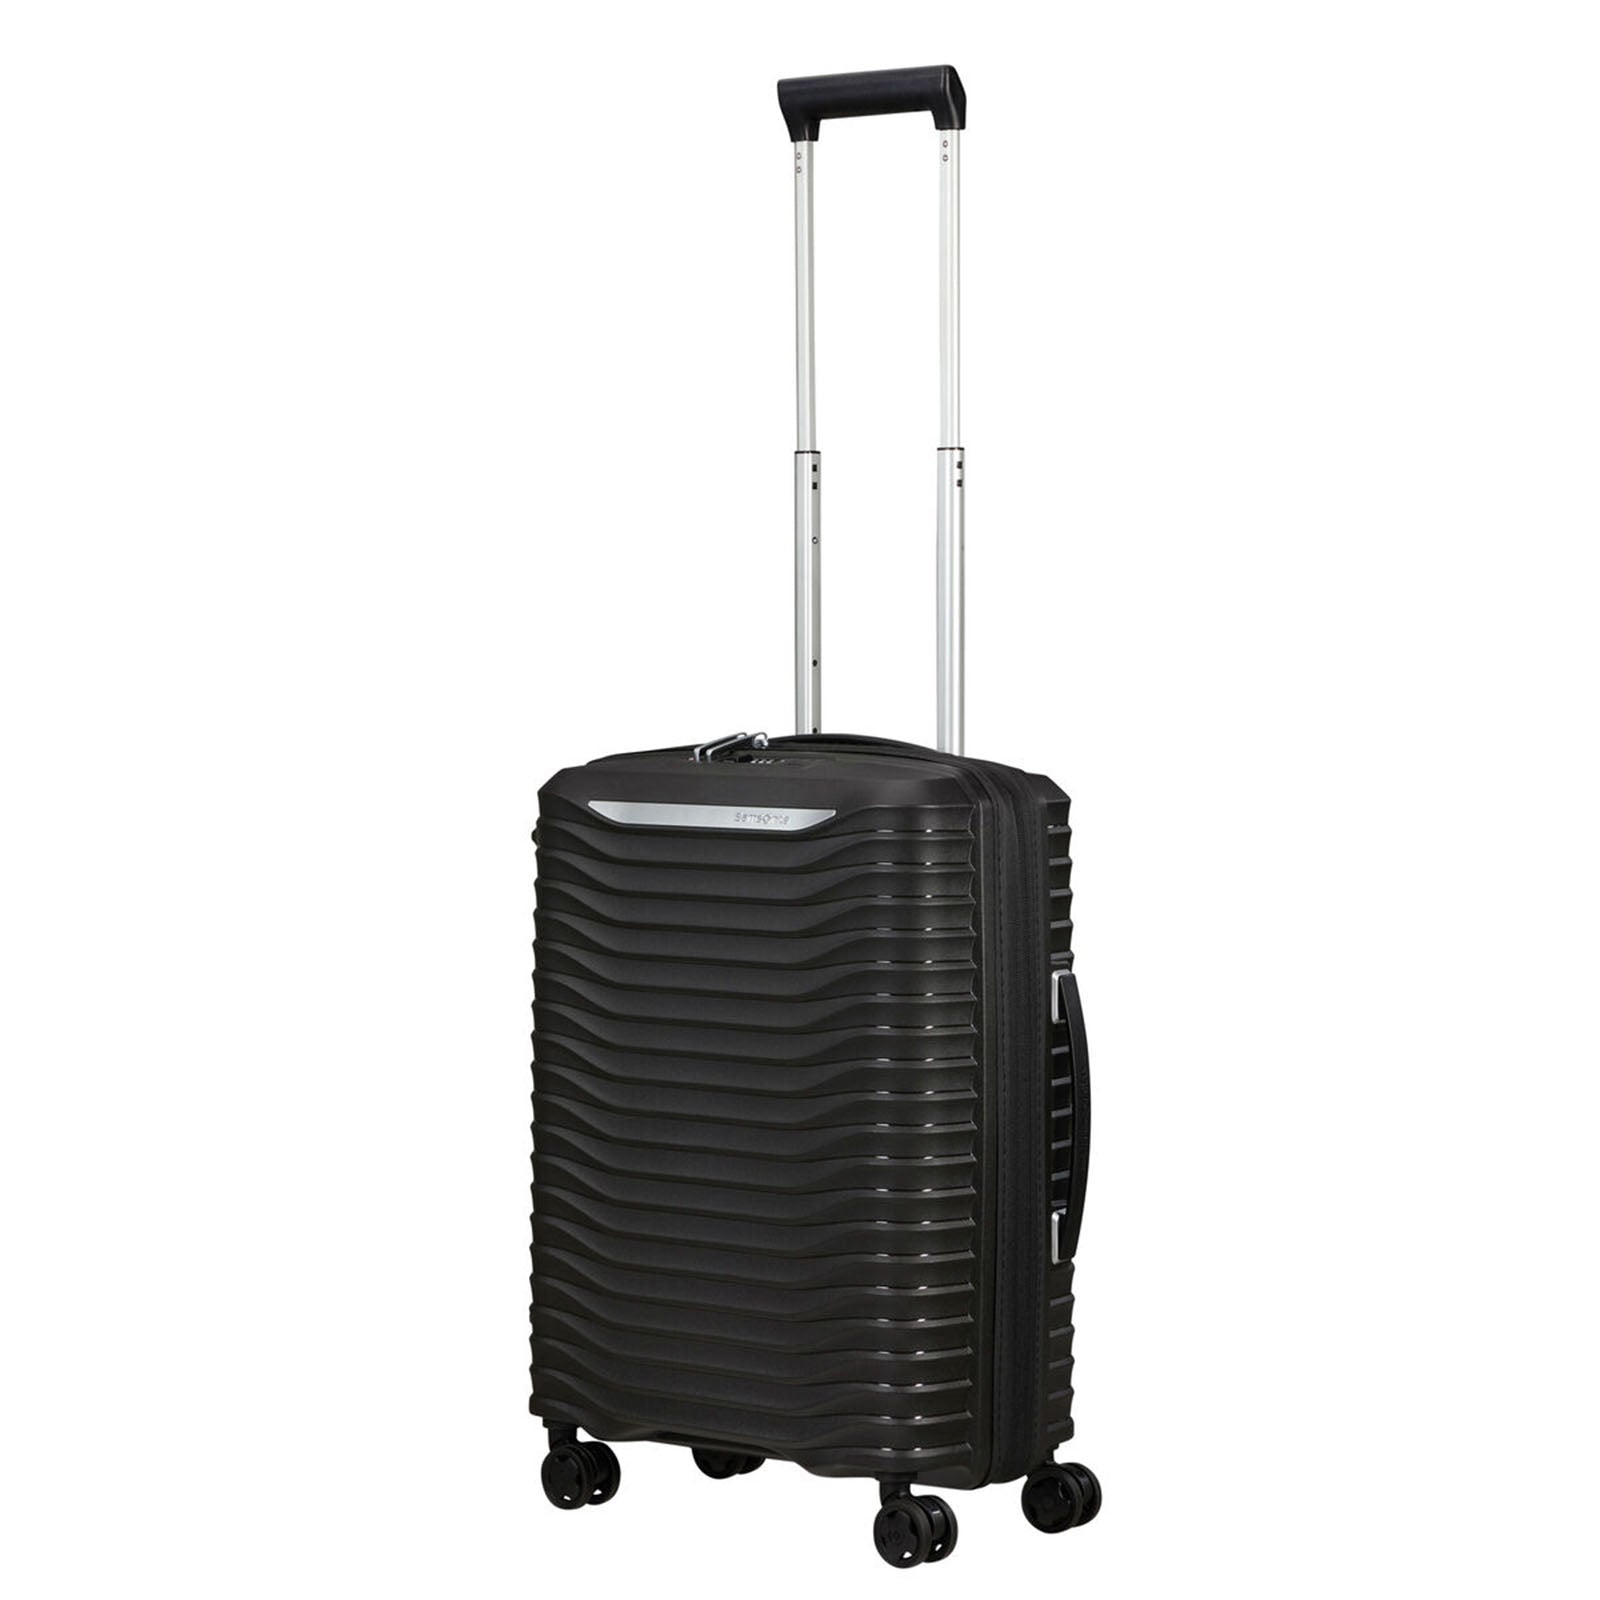 Samsonite-Upscape-55cm-Suitcase-Black-Front-Angle